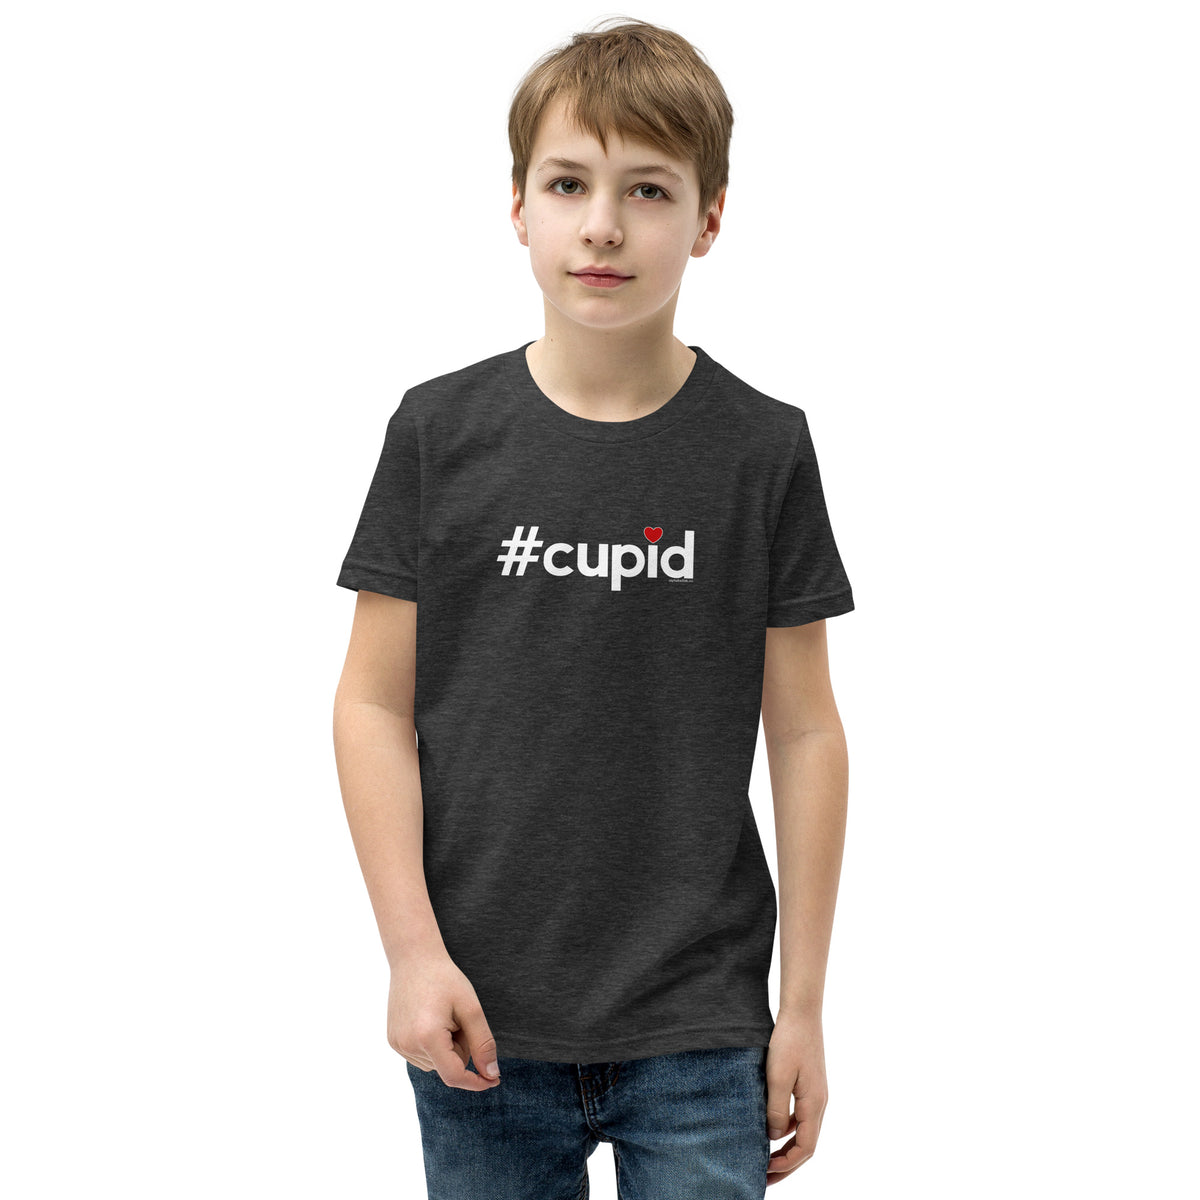 Hashtag Cupid Kids Valentine’s Day T-Shirt